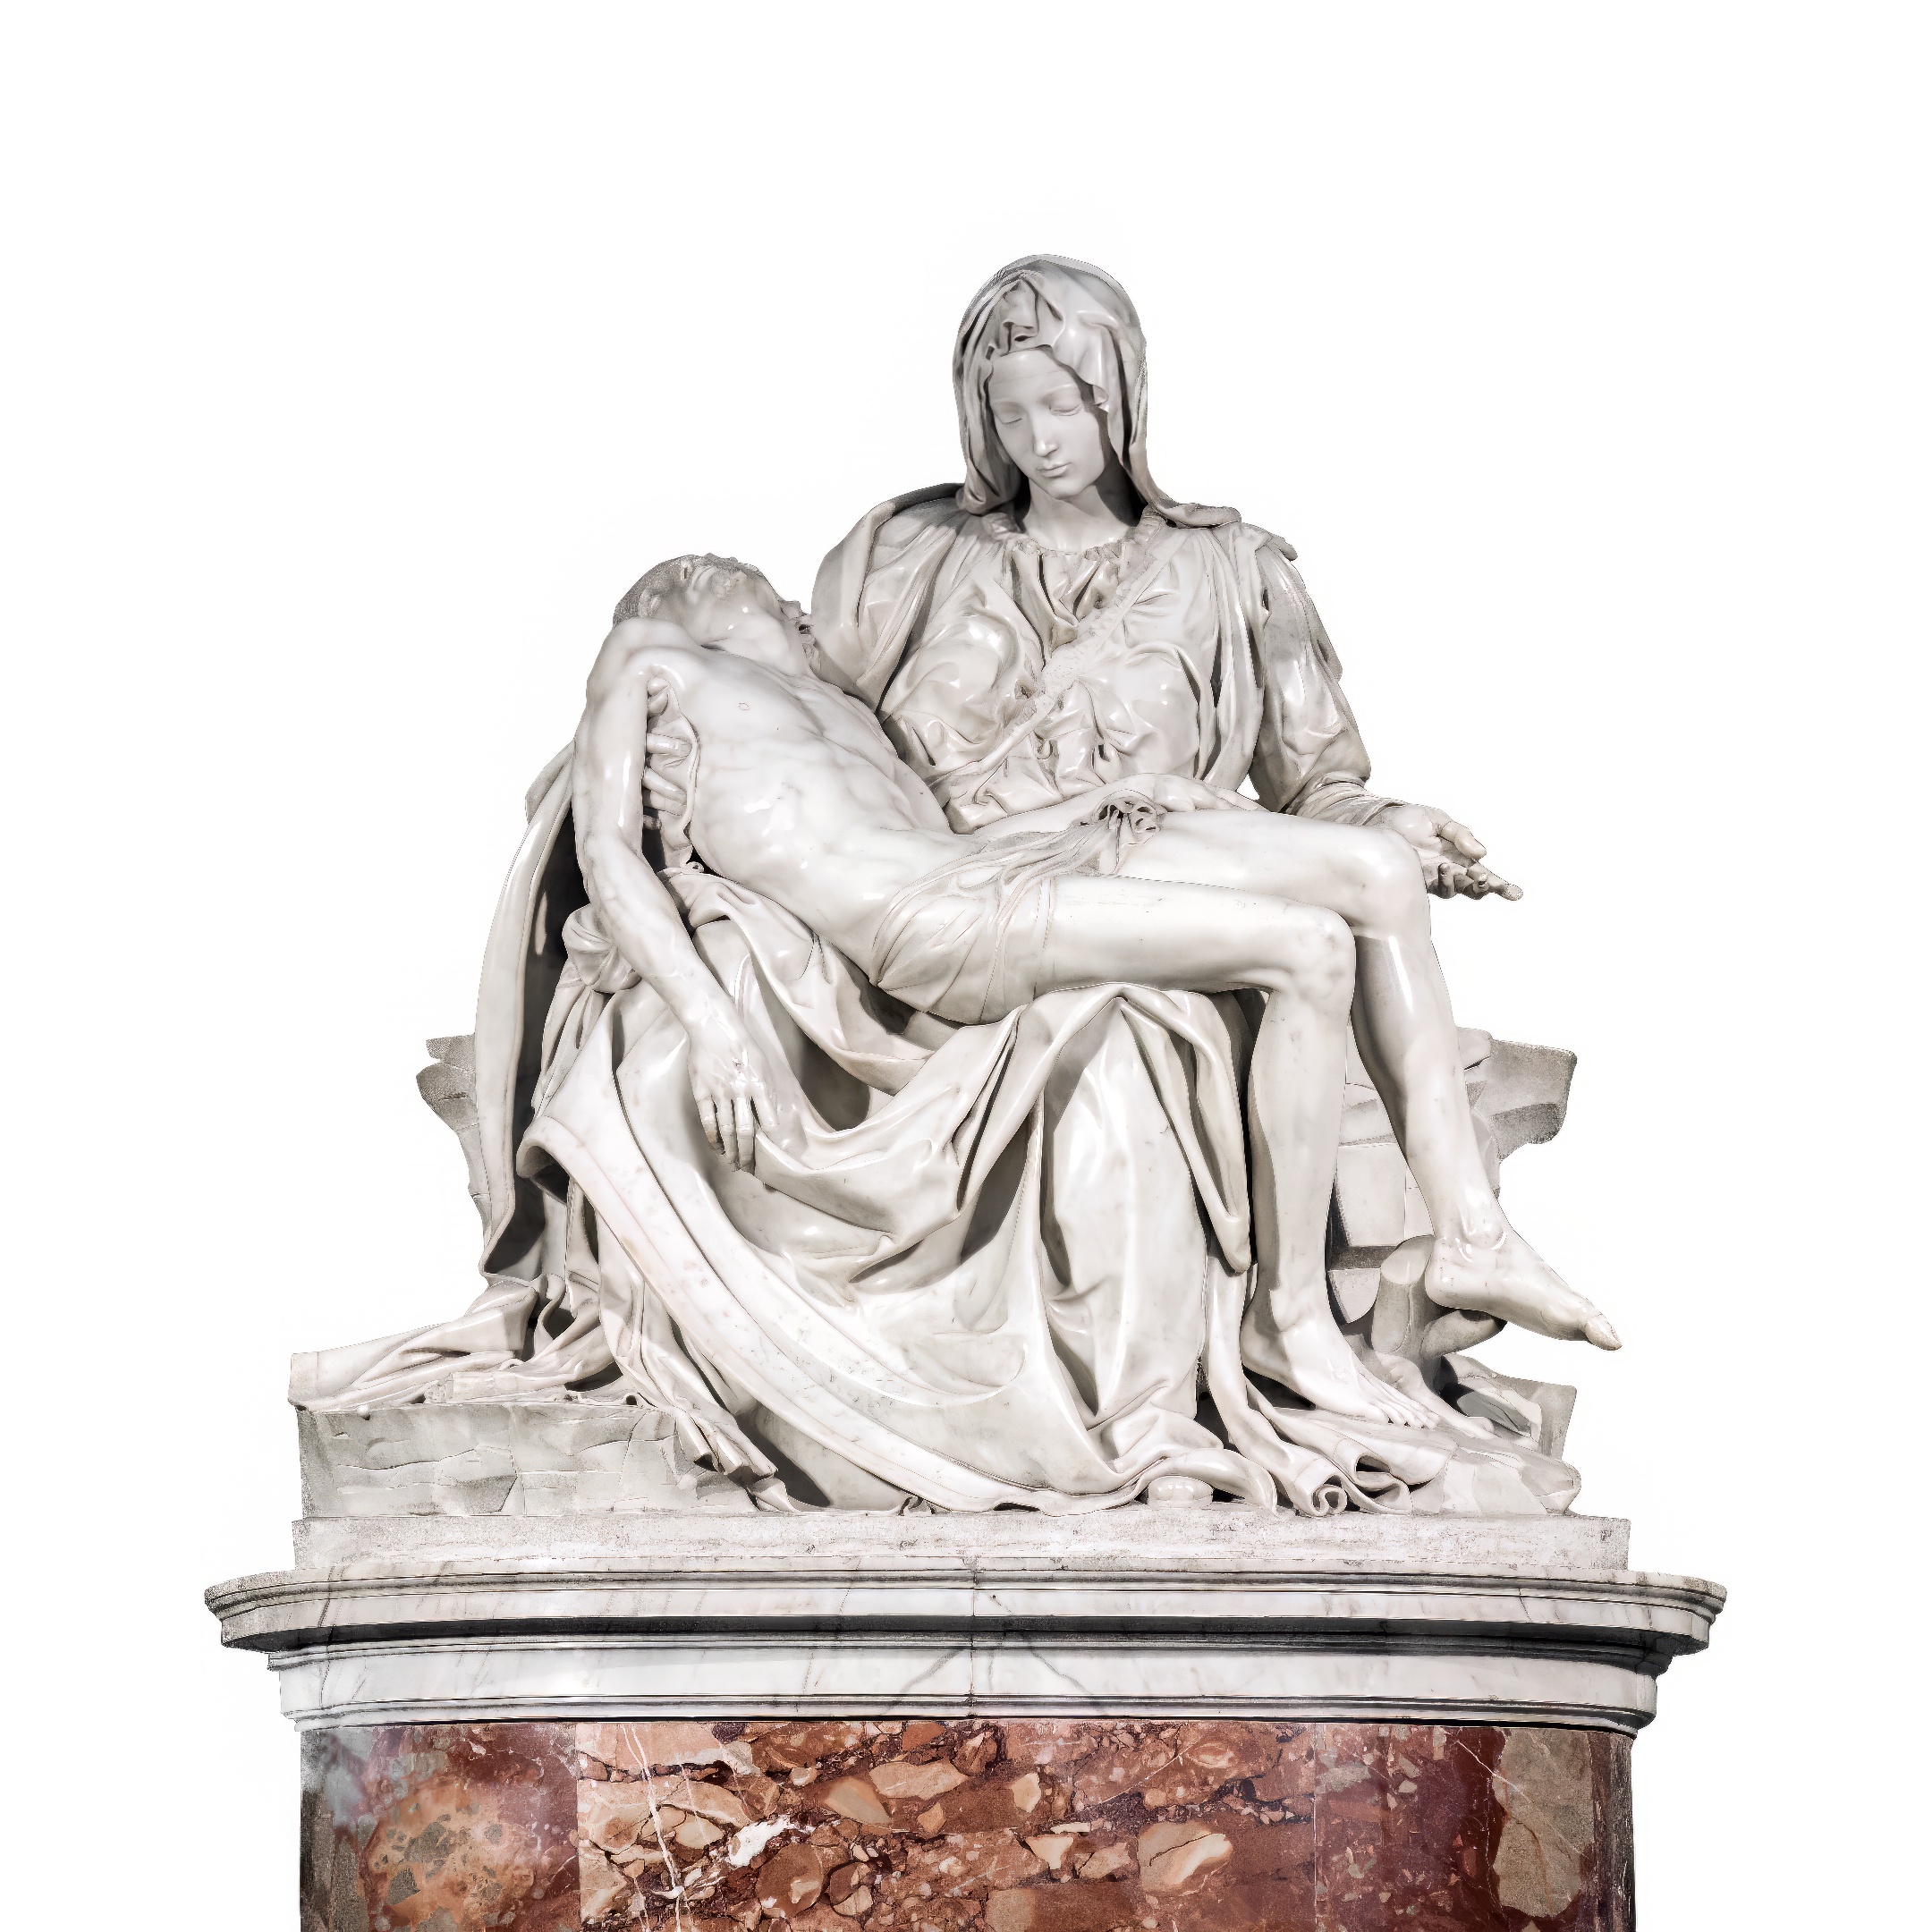 Pieta sculpture, Michelangelo Pieta, Roman Pieta, Pietra Santa, religious art